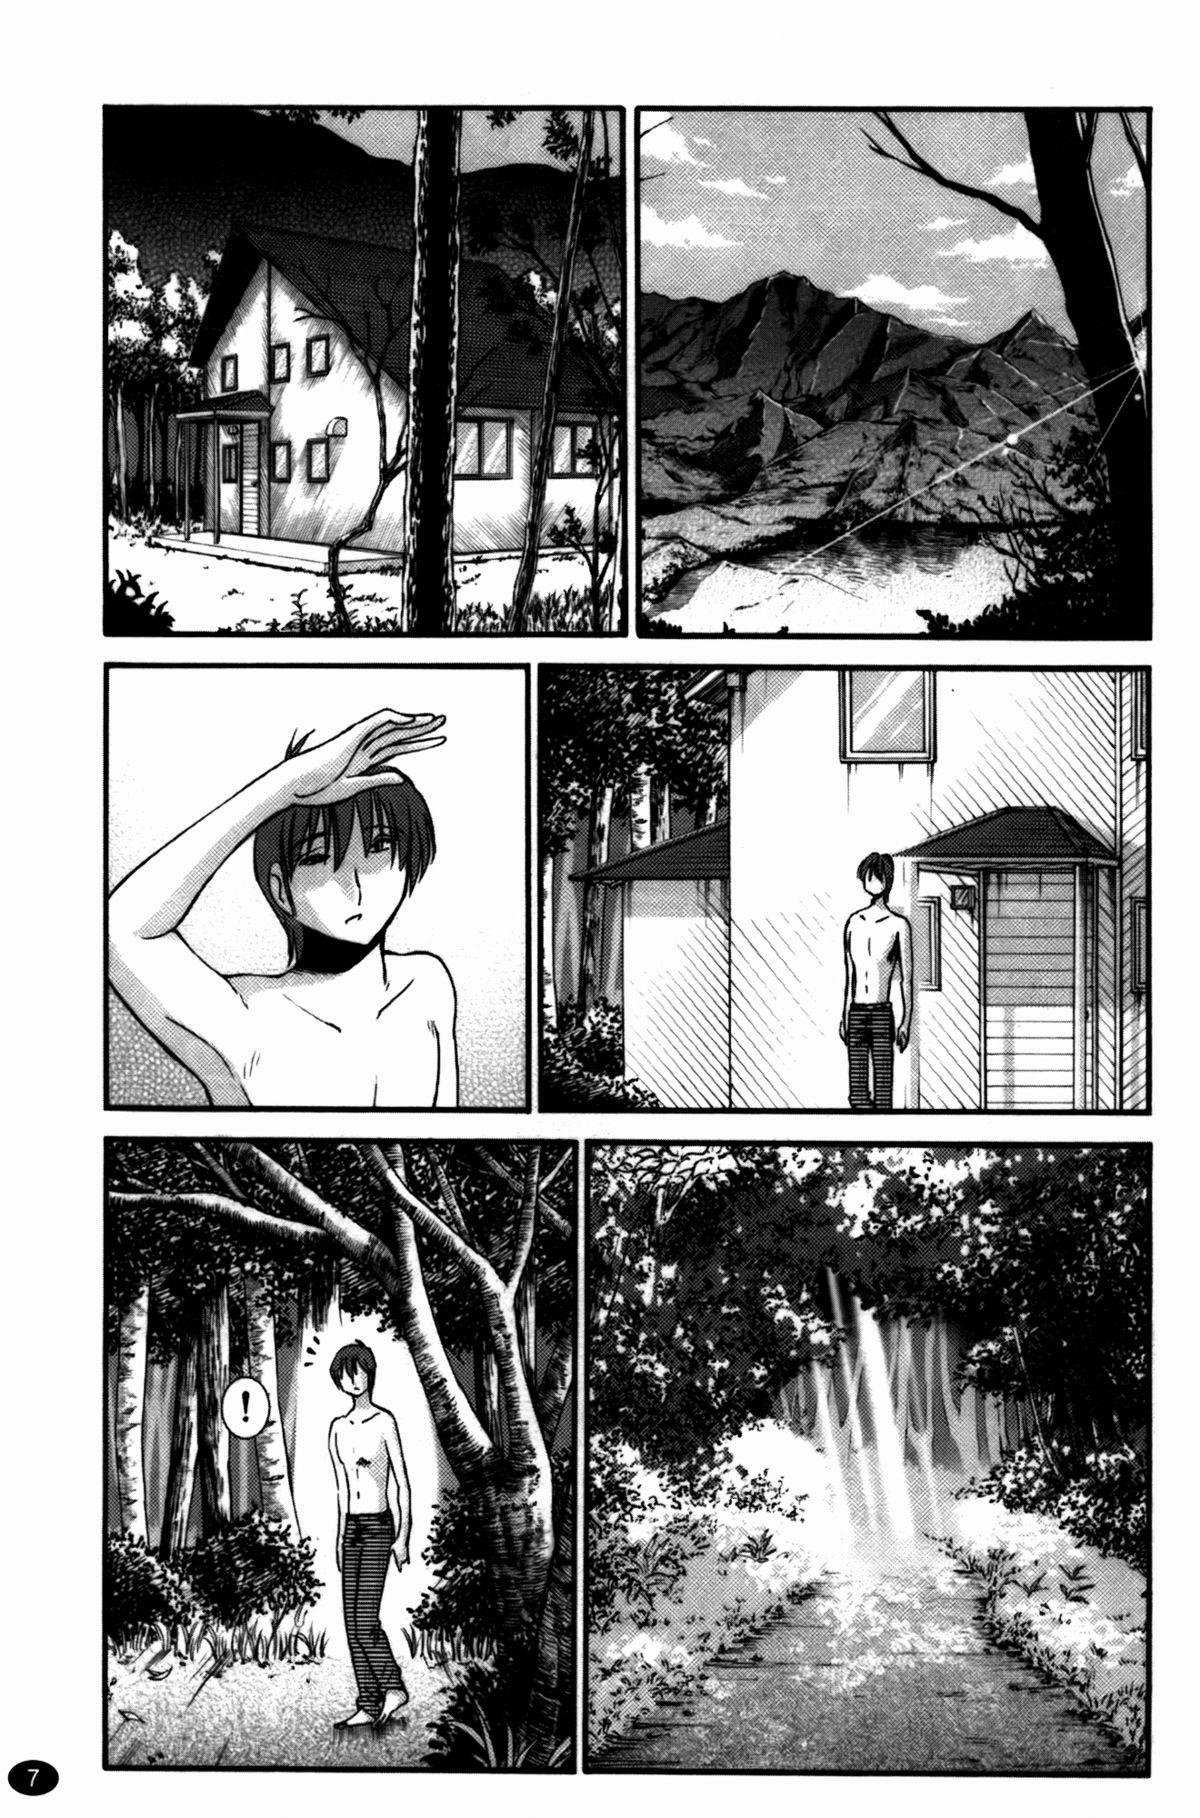 Sexy Monokage no Irisu Volume 3 Chapter 17 Hardcorend - Page 8